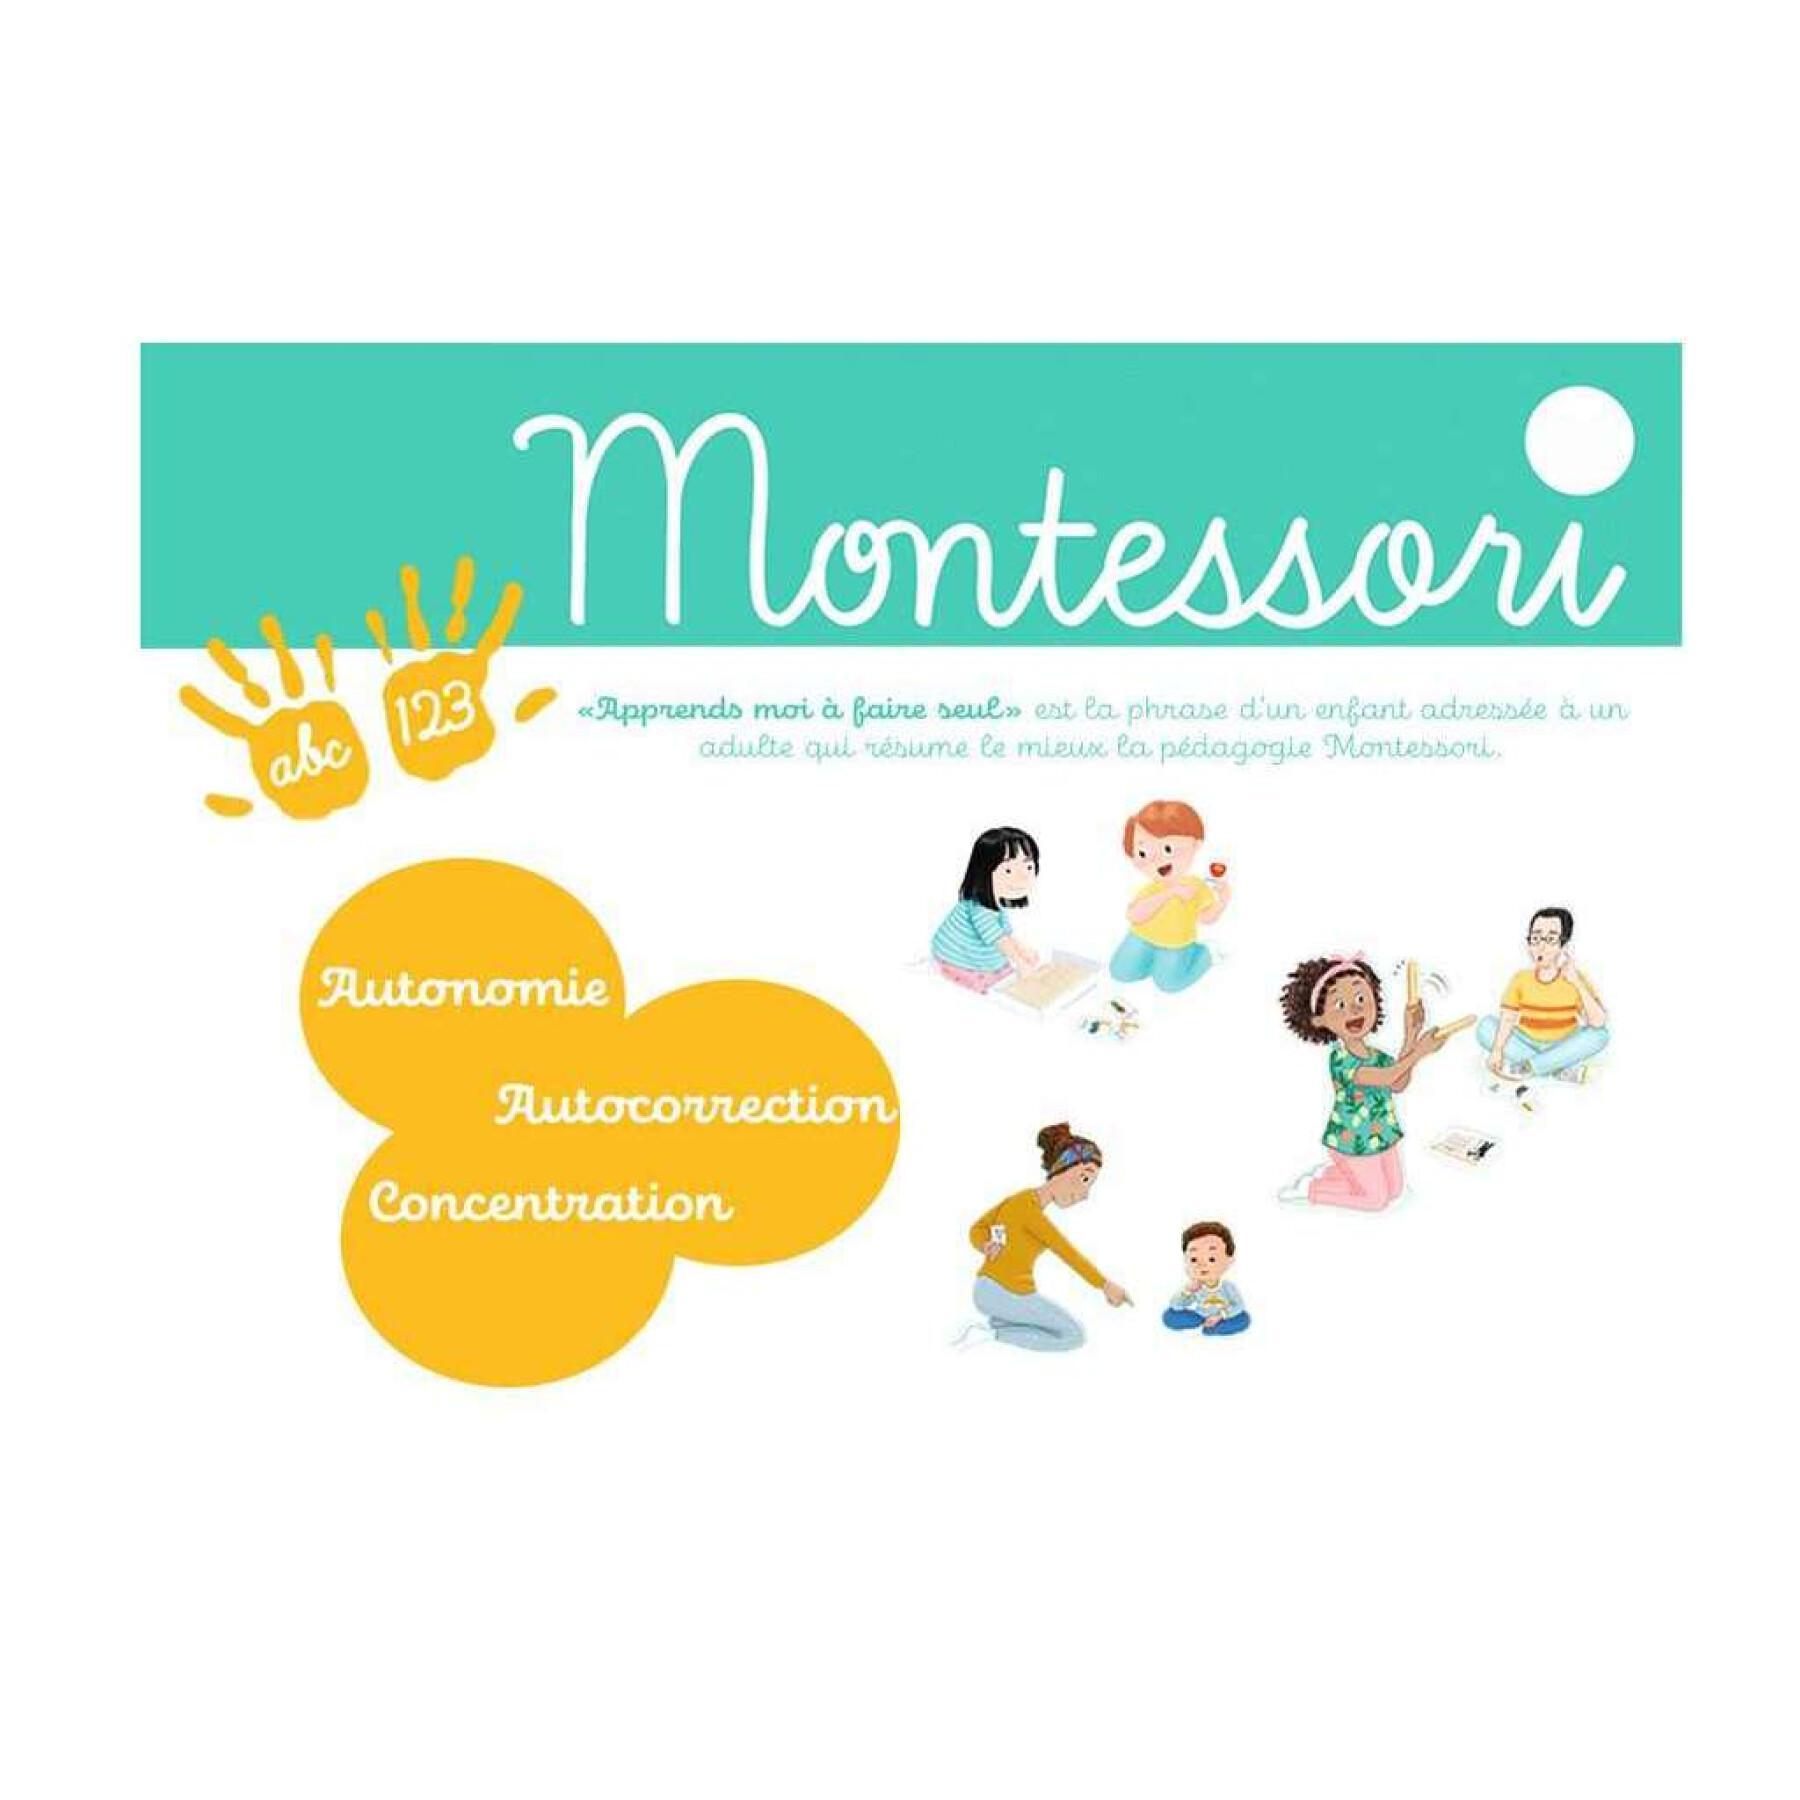 Montessori - Lettres et chiffres Ravensburger